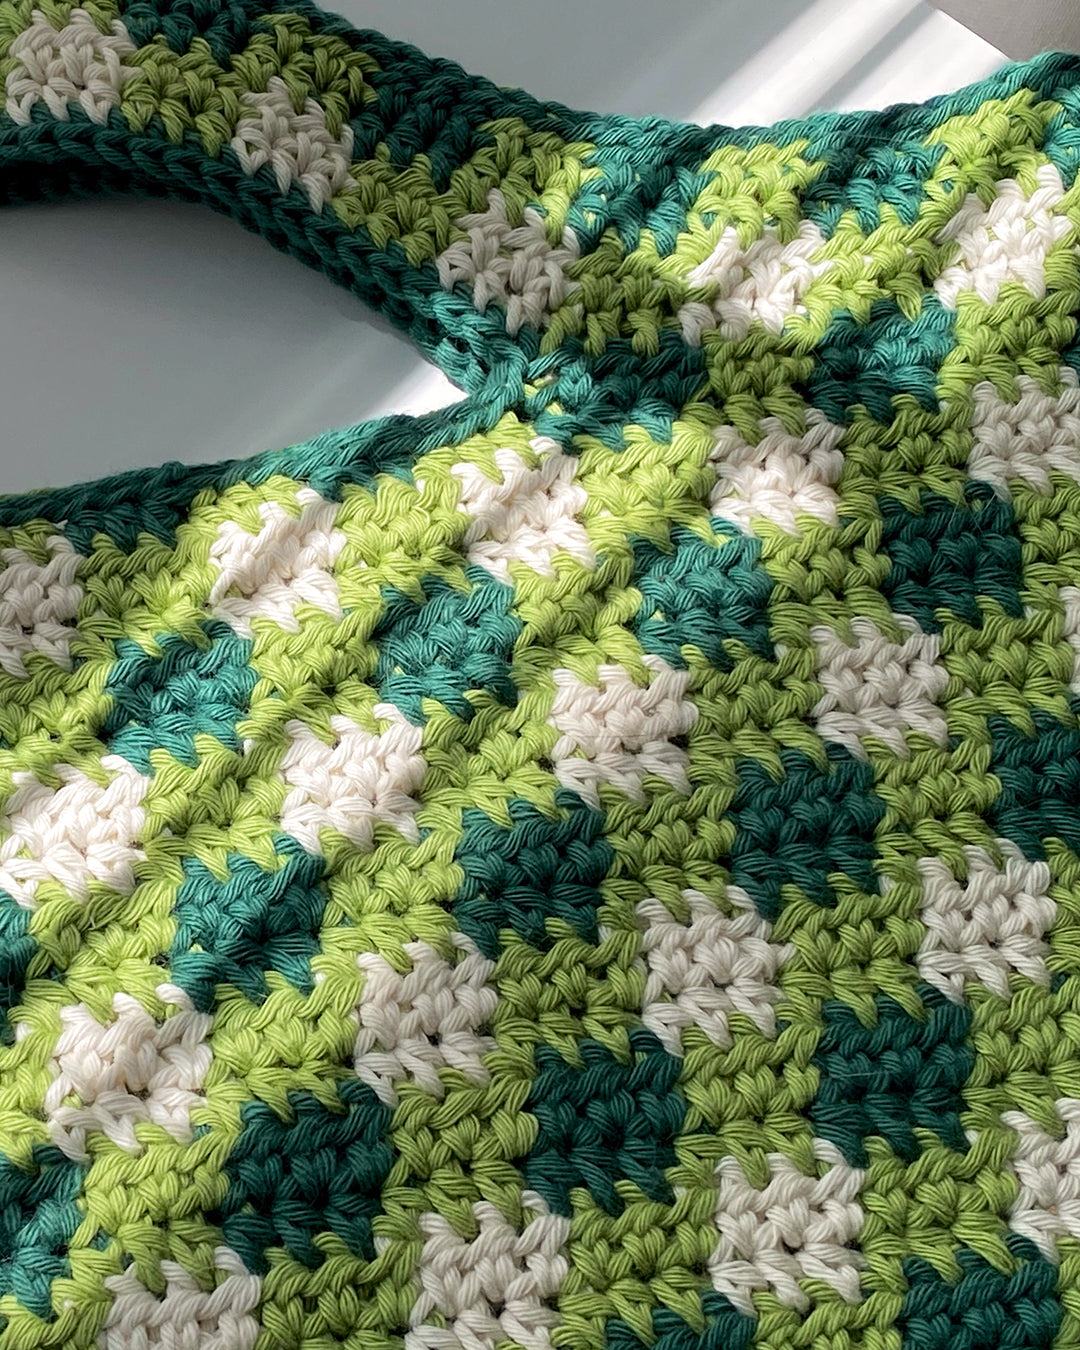 Crochet bag pattern ✧ Picnic bag